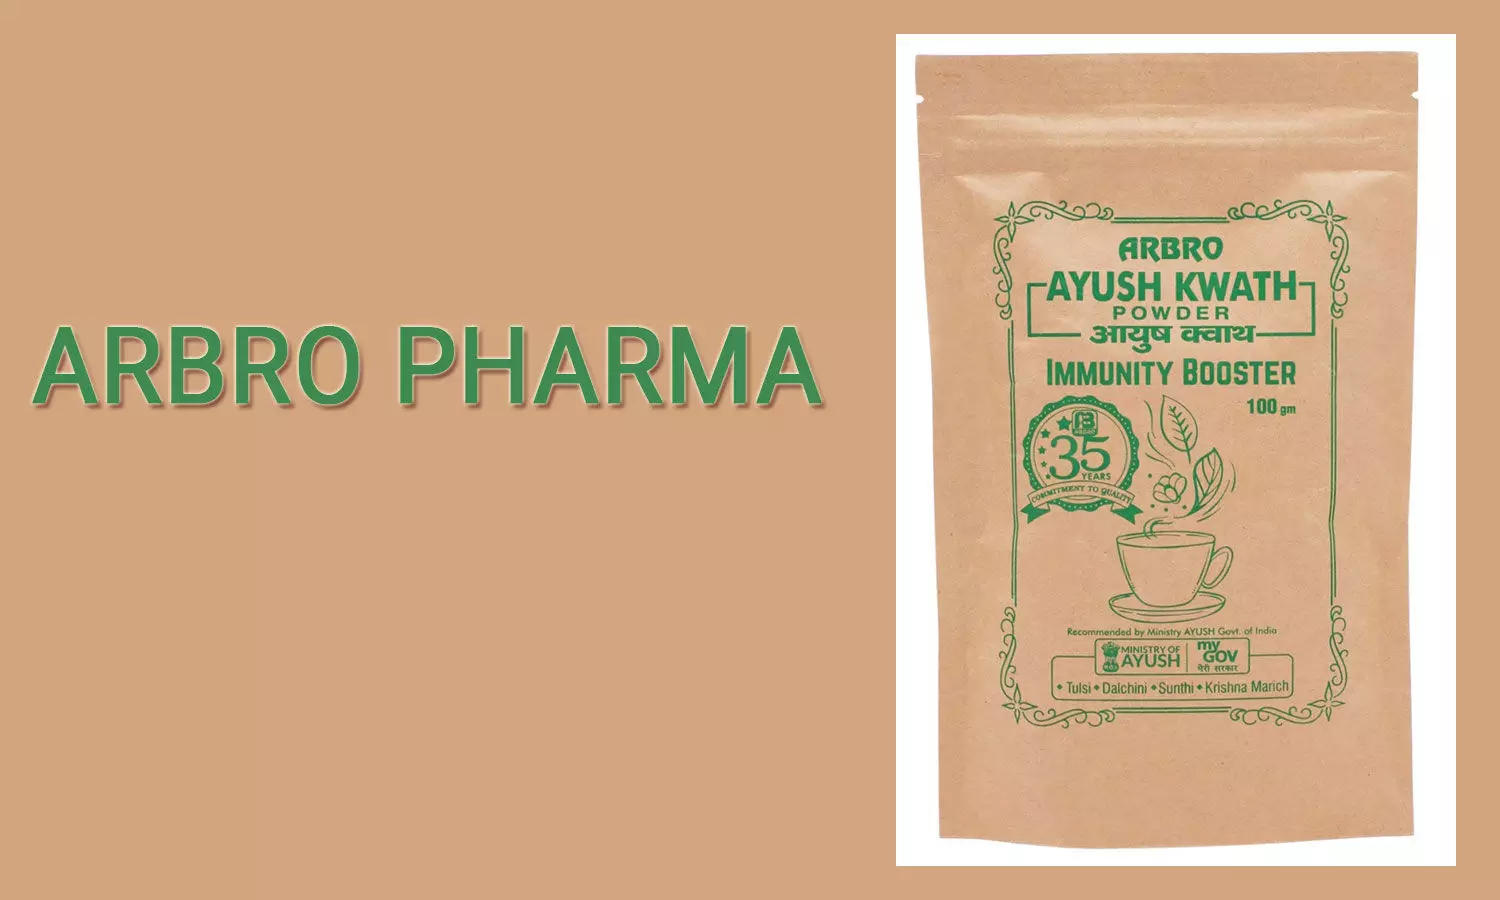 Delhi-based Arbro Pharma launches Ayush Kwath Powder Immunity Booster